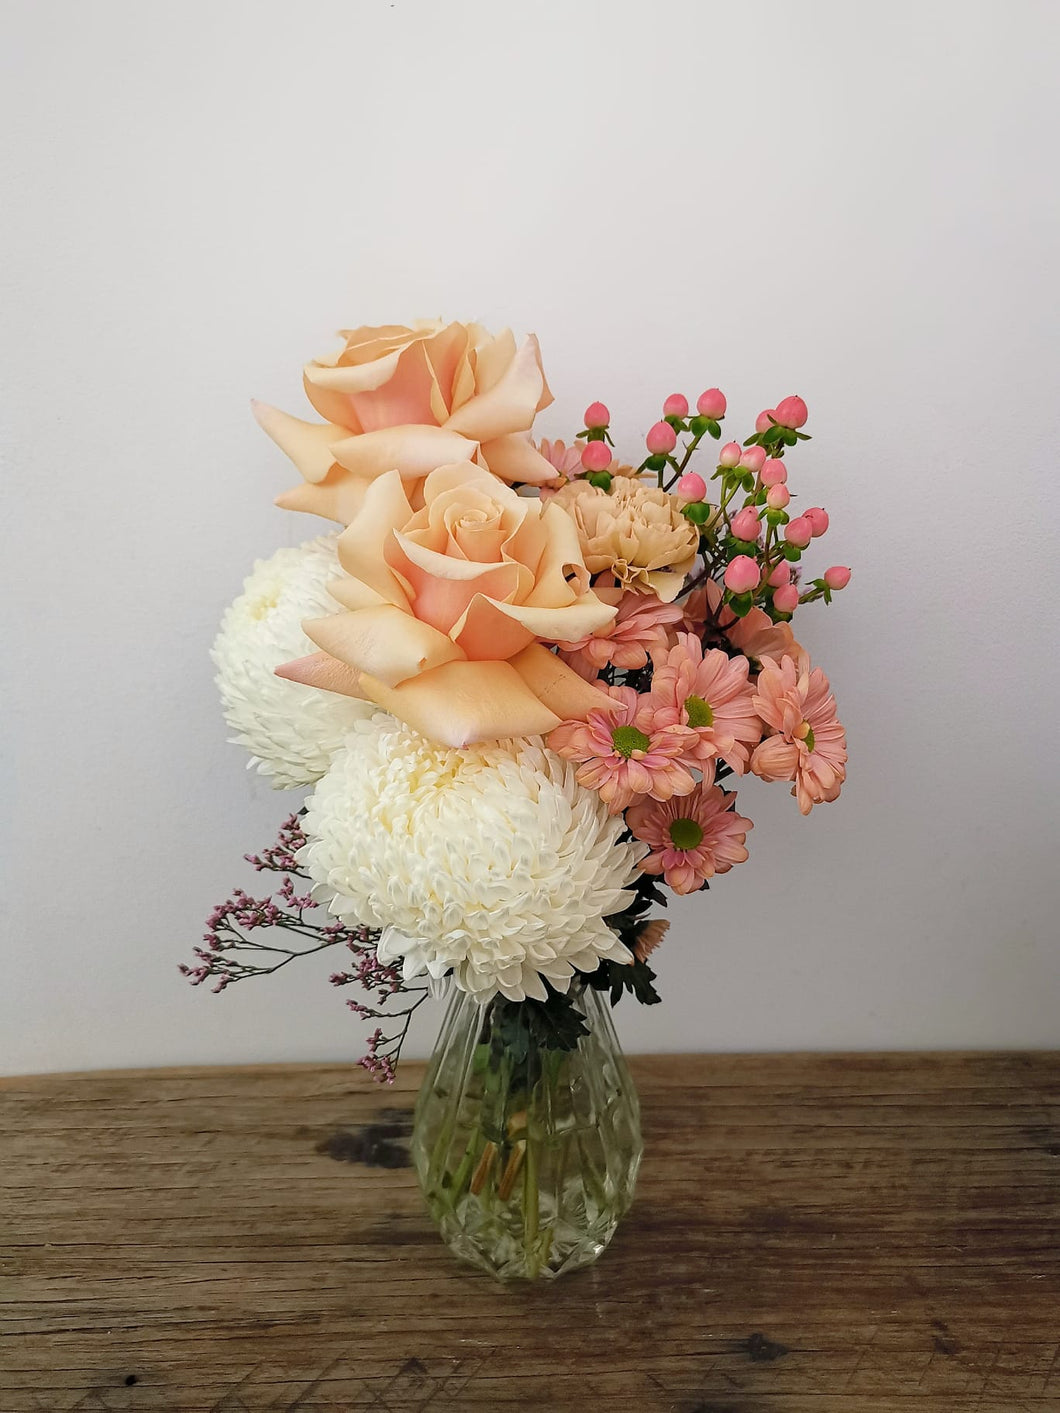 Floral arrangement + glass vase